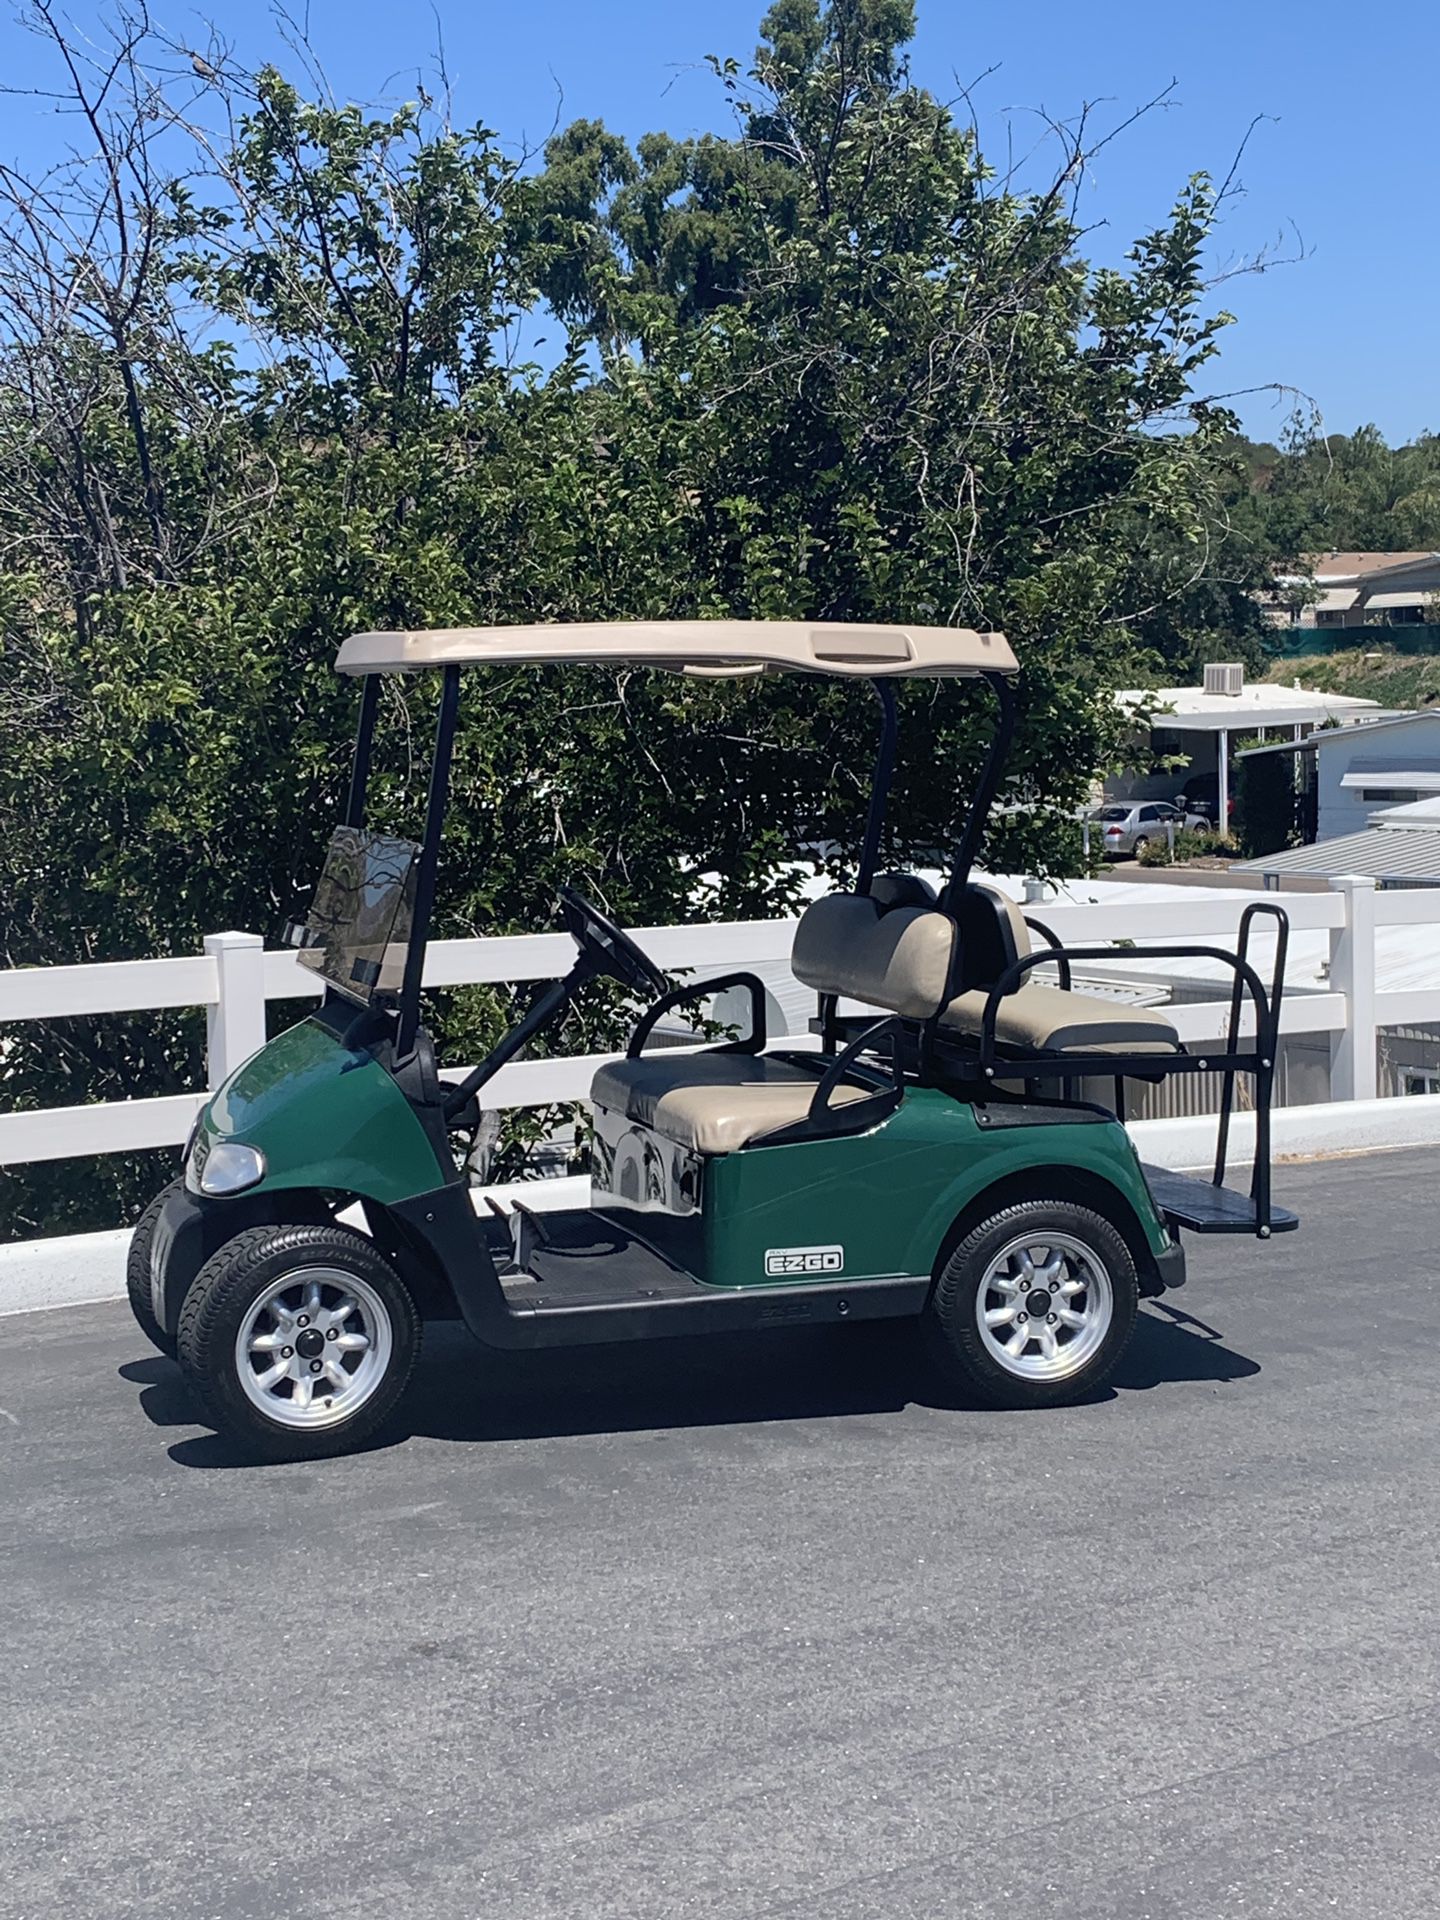 Ezgo rxv golf cart